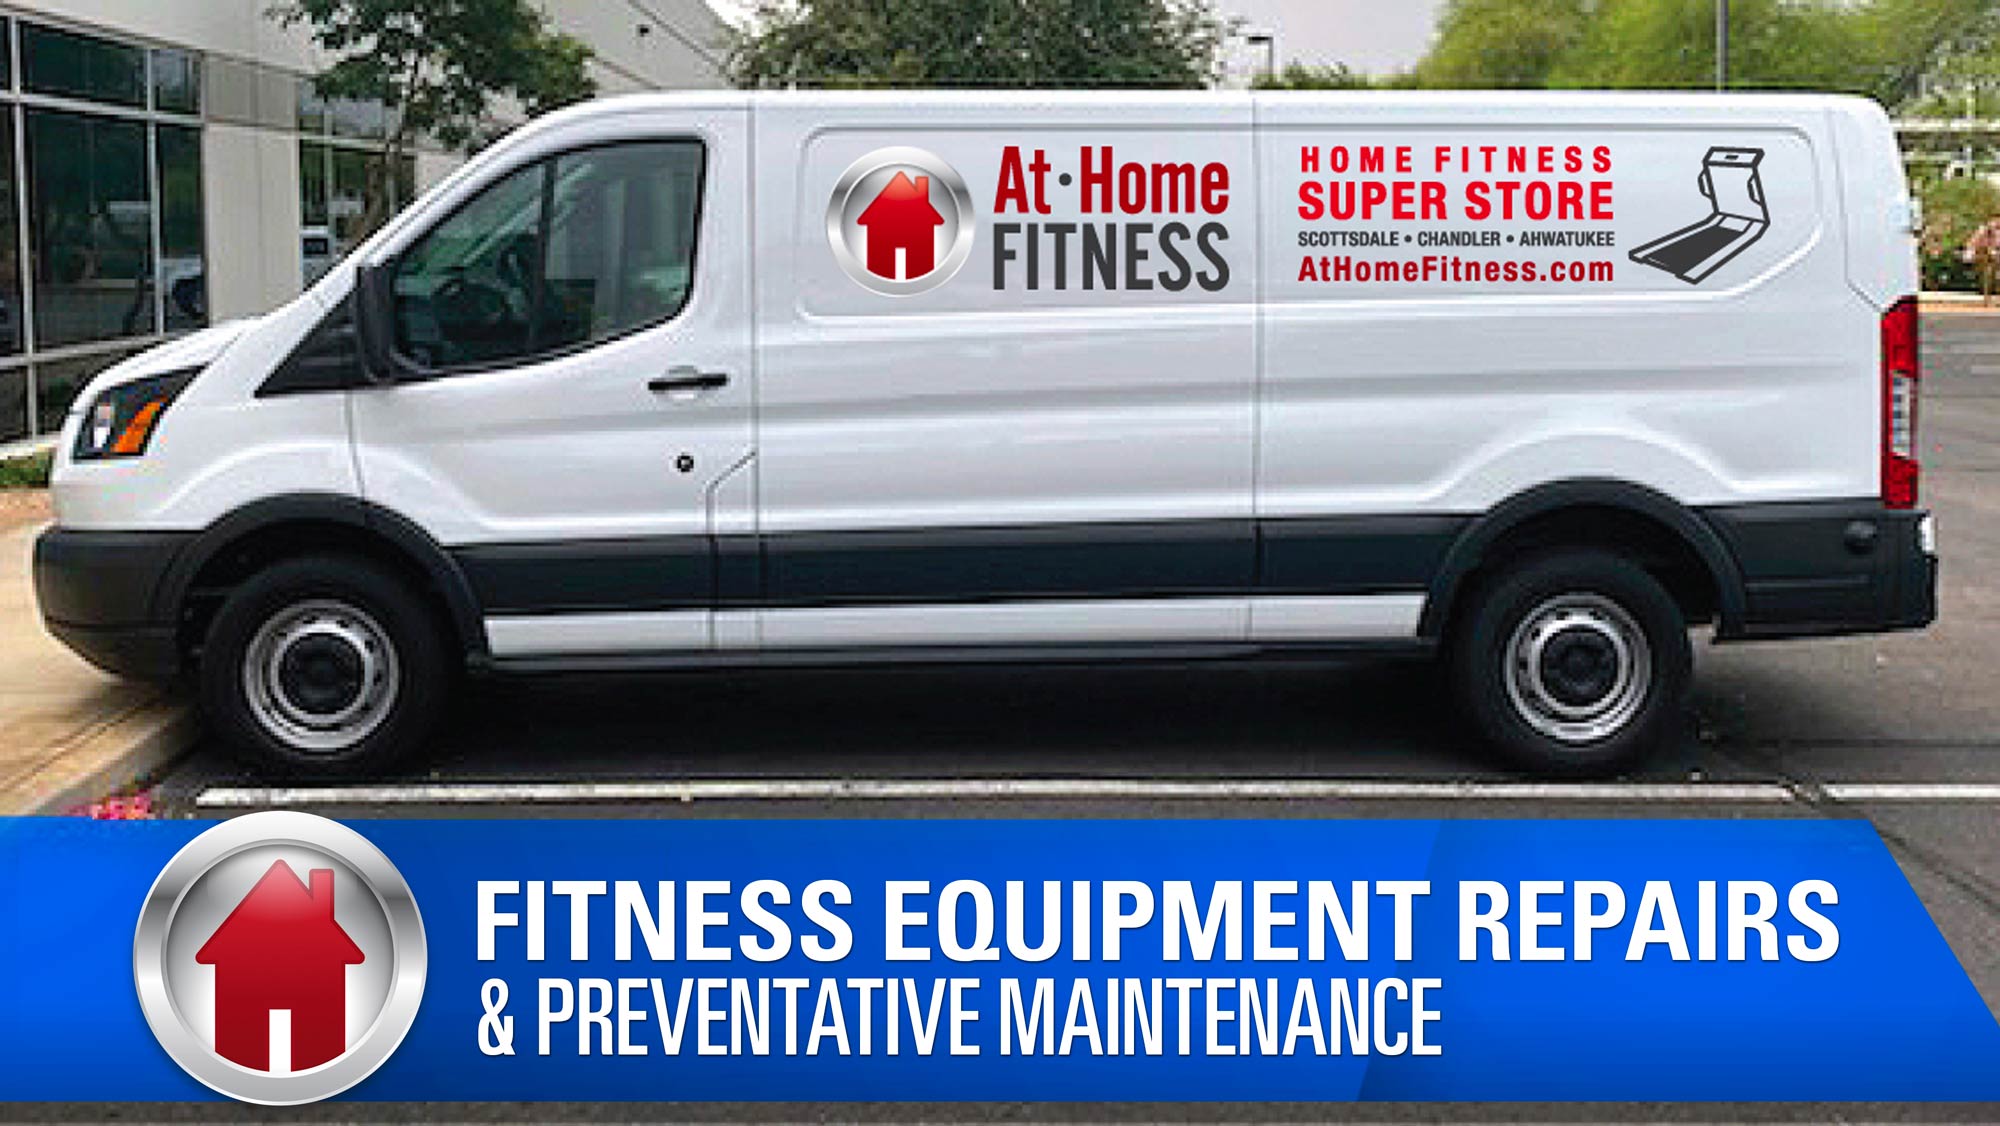 Preventative Maintenance and Fitness Equipment Repairs